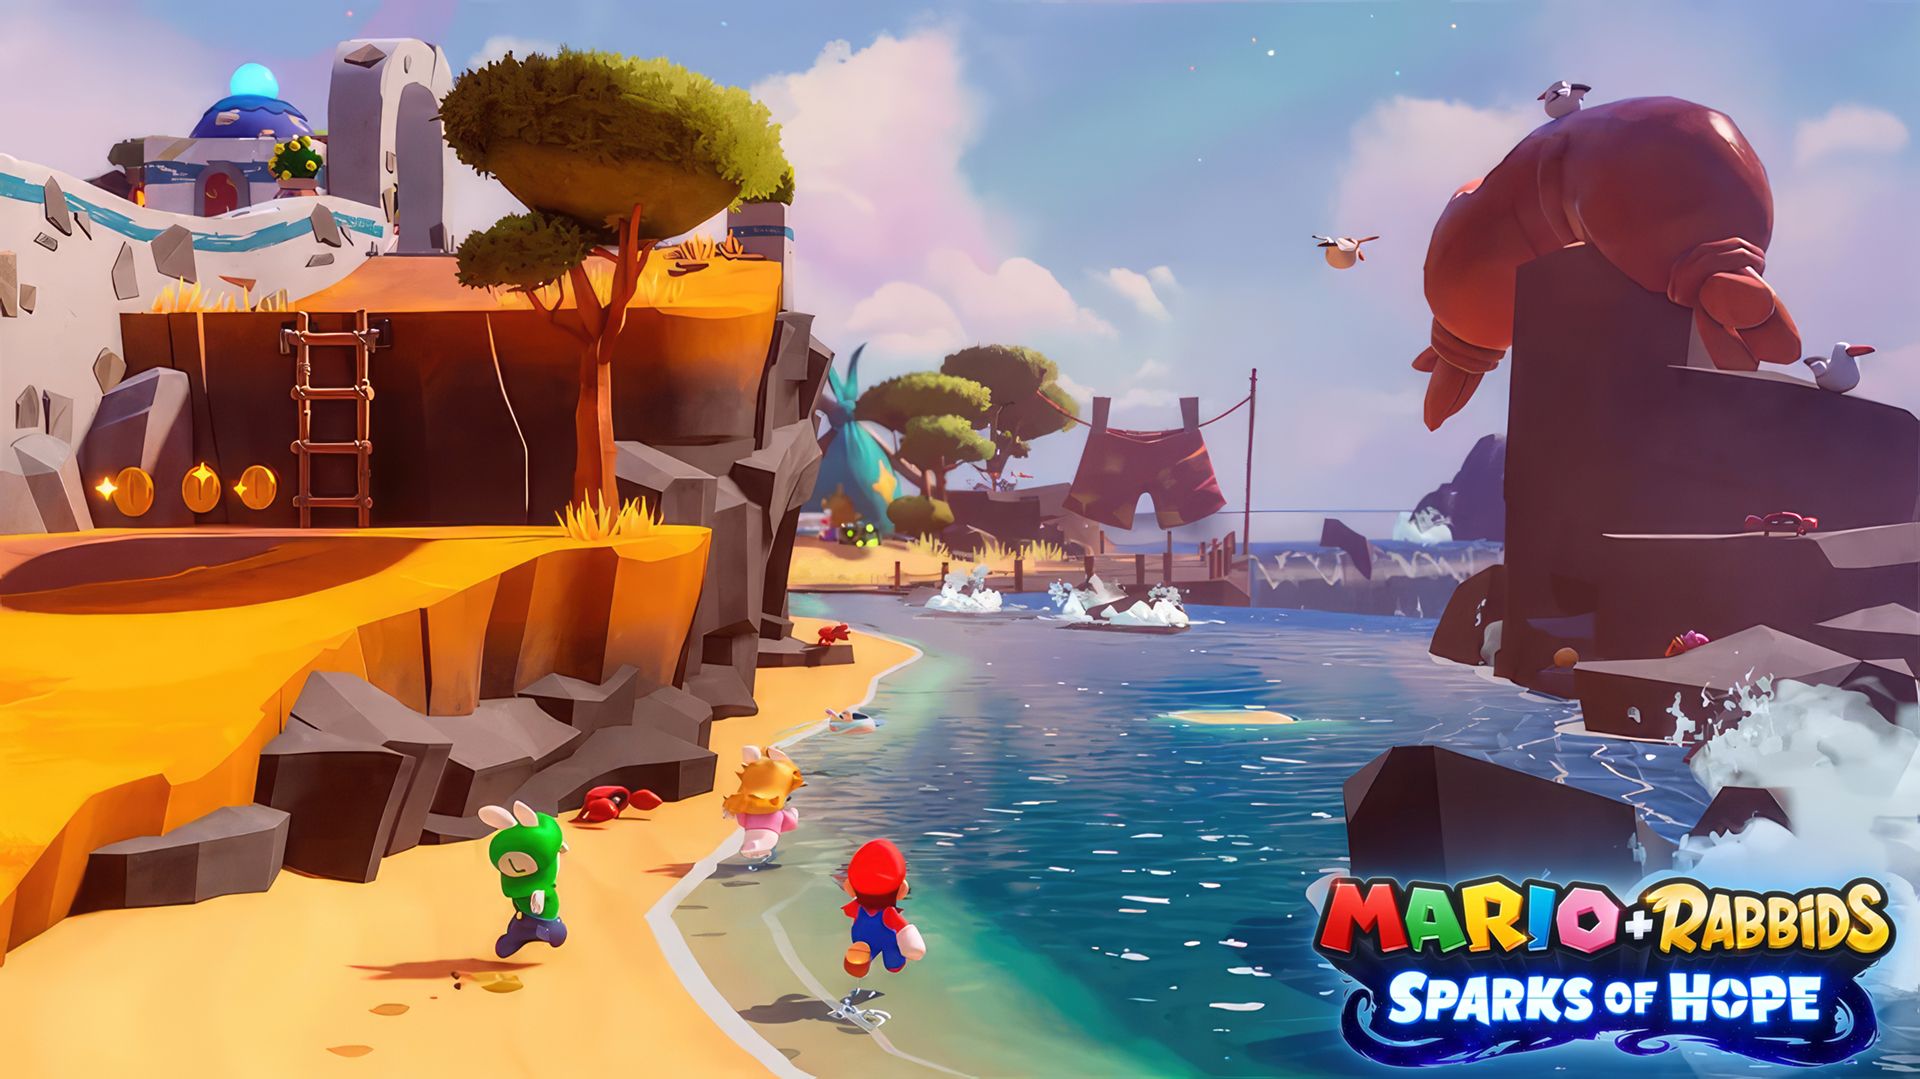 Mario + Rabbids Sparks of Hope eShop beach promo screenshot upscaled with game logo